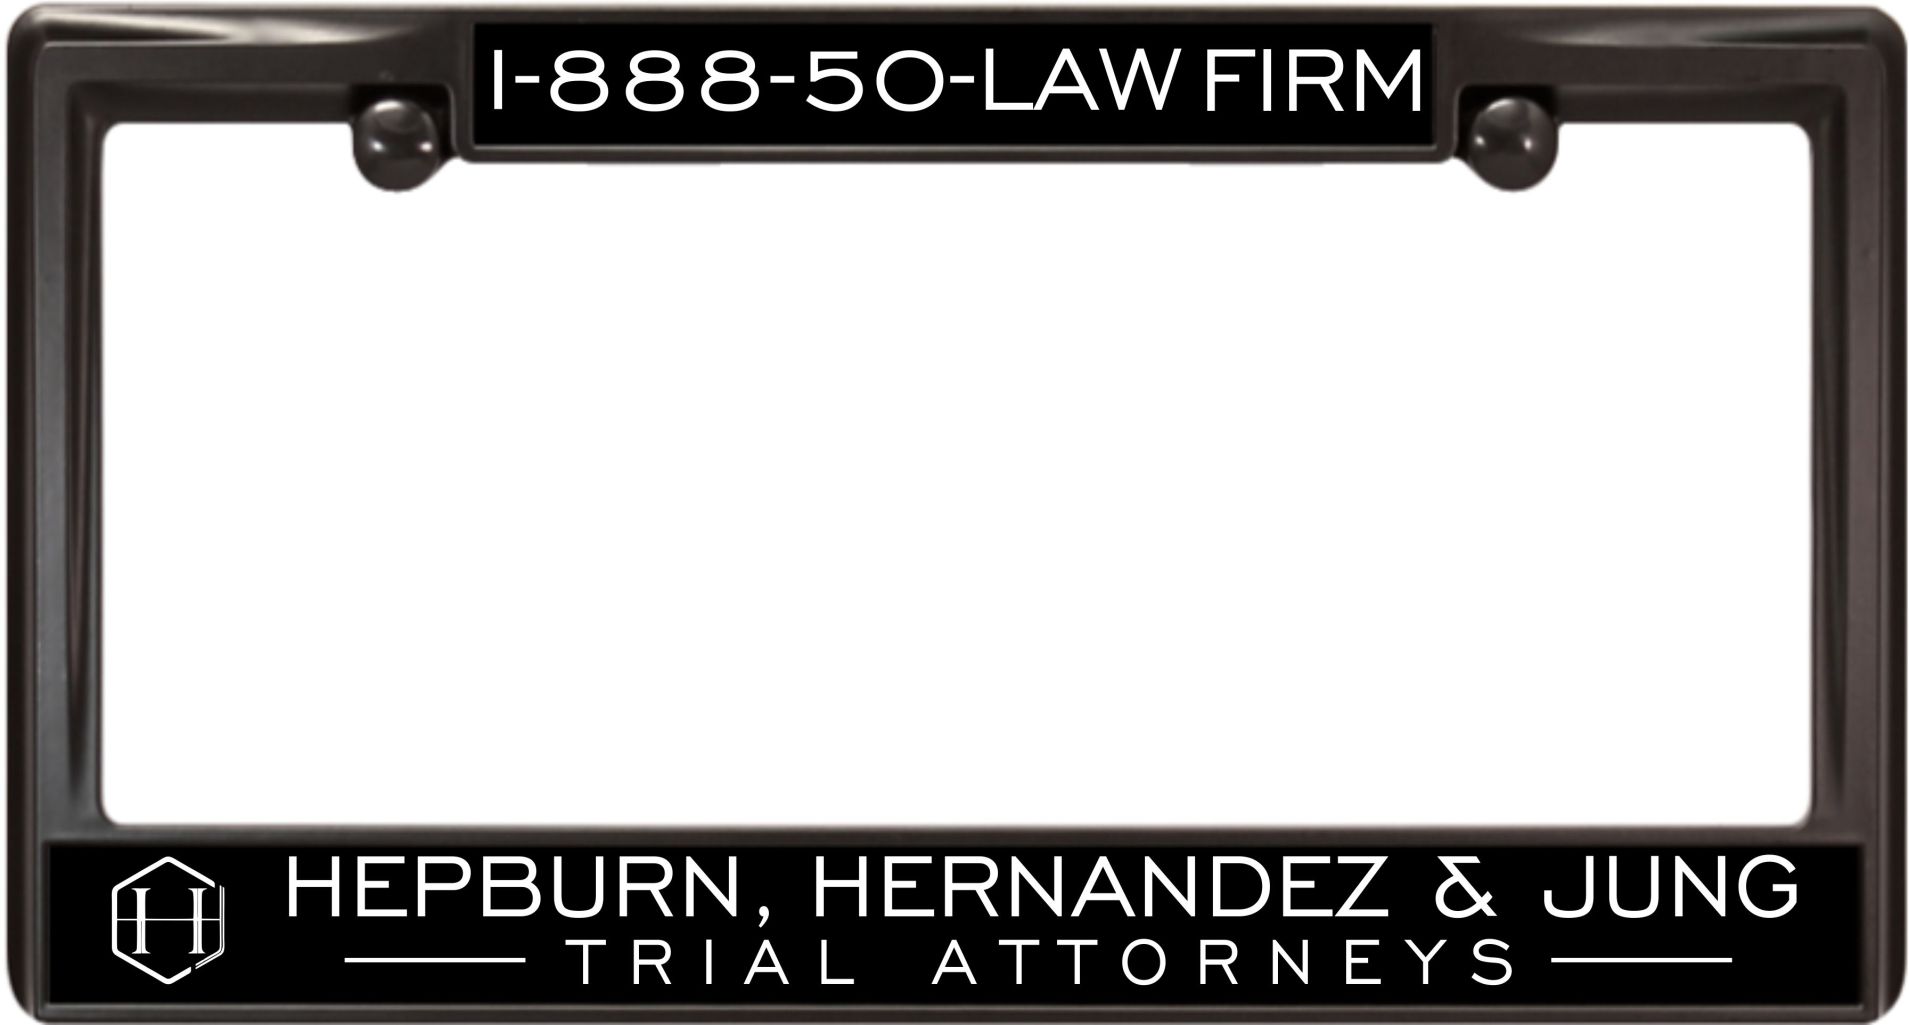 Law Firm - Custom Heavy Duty Car License Plate Frame